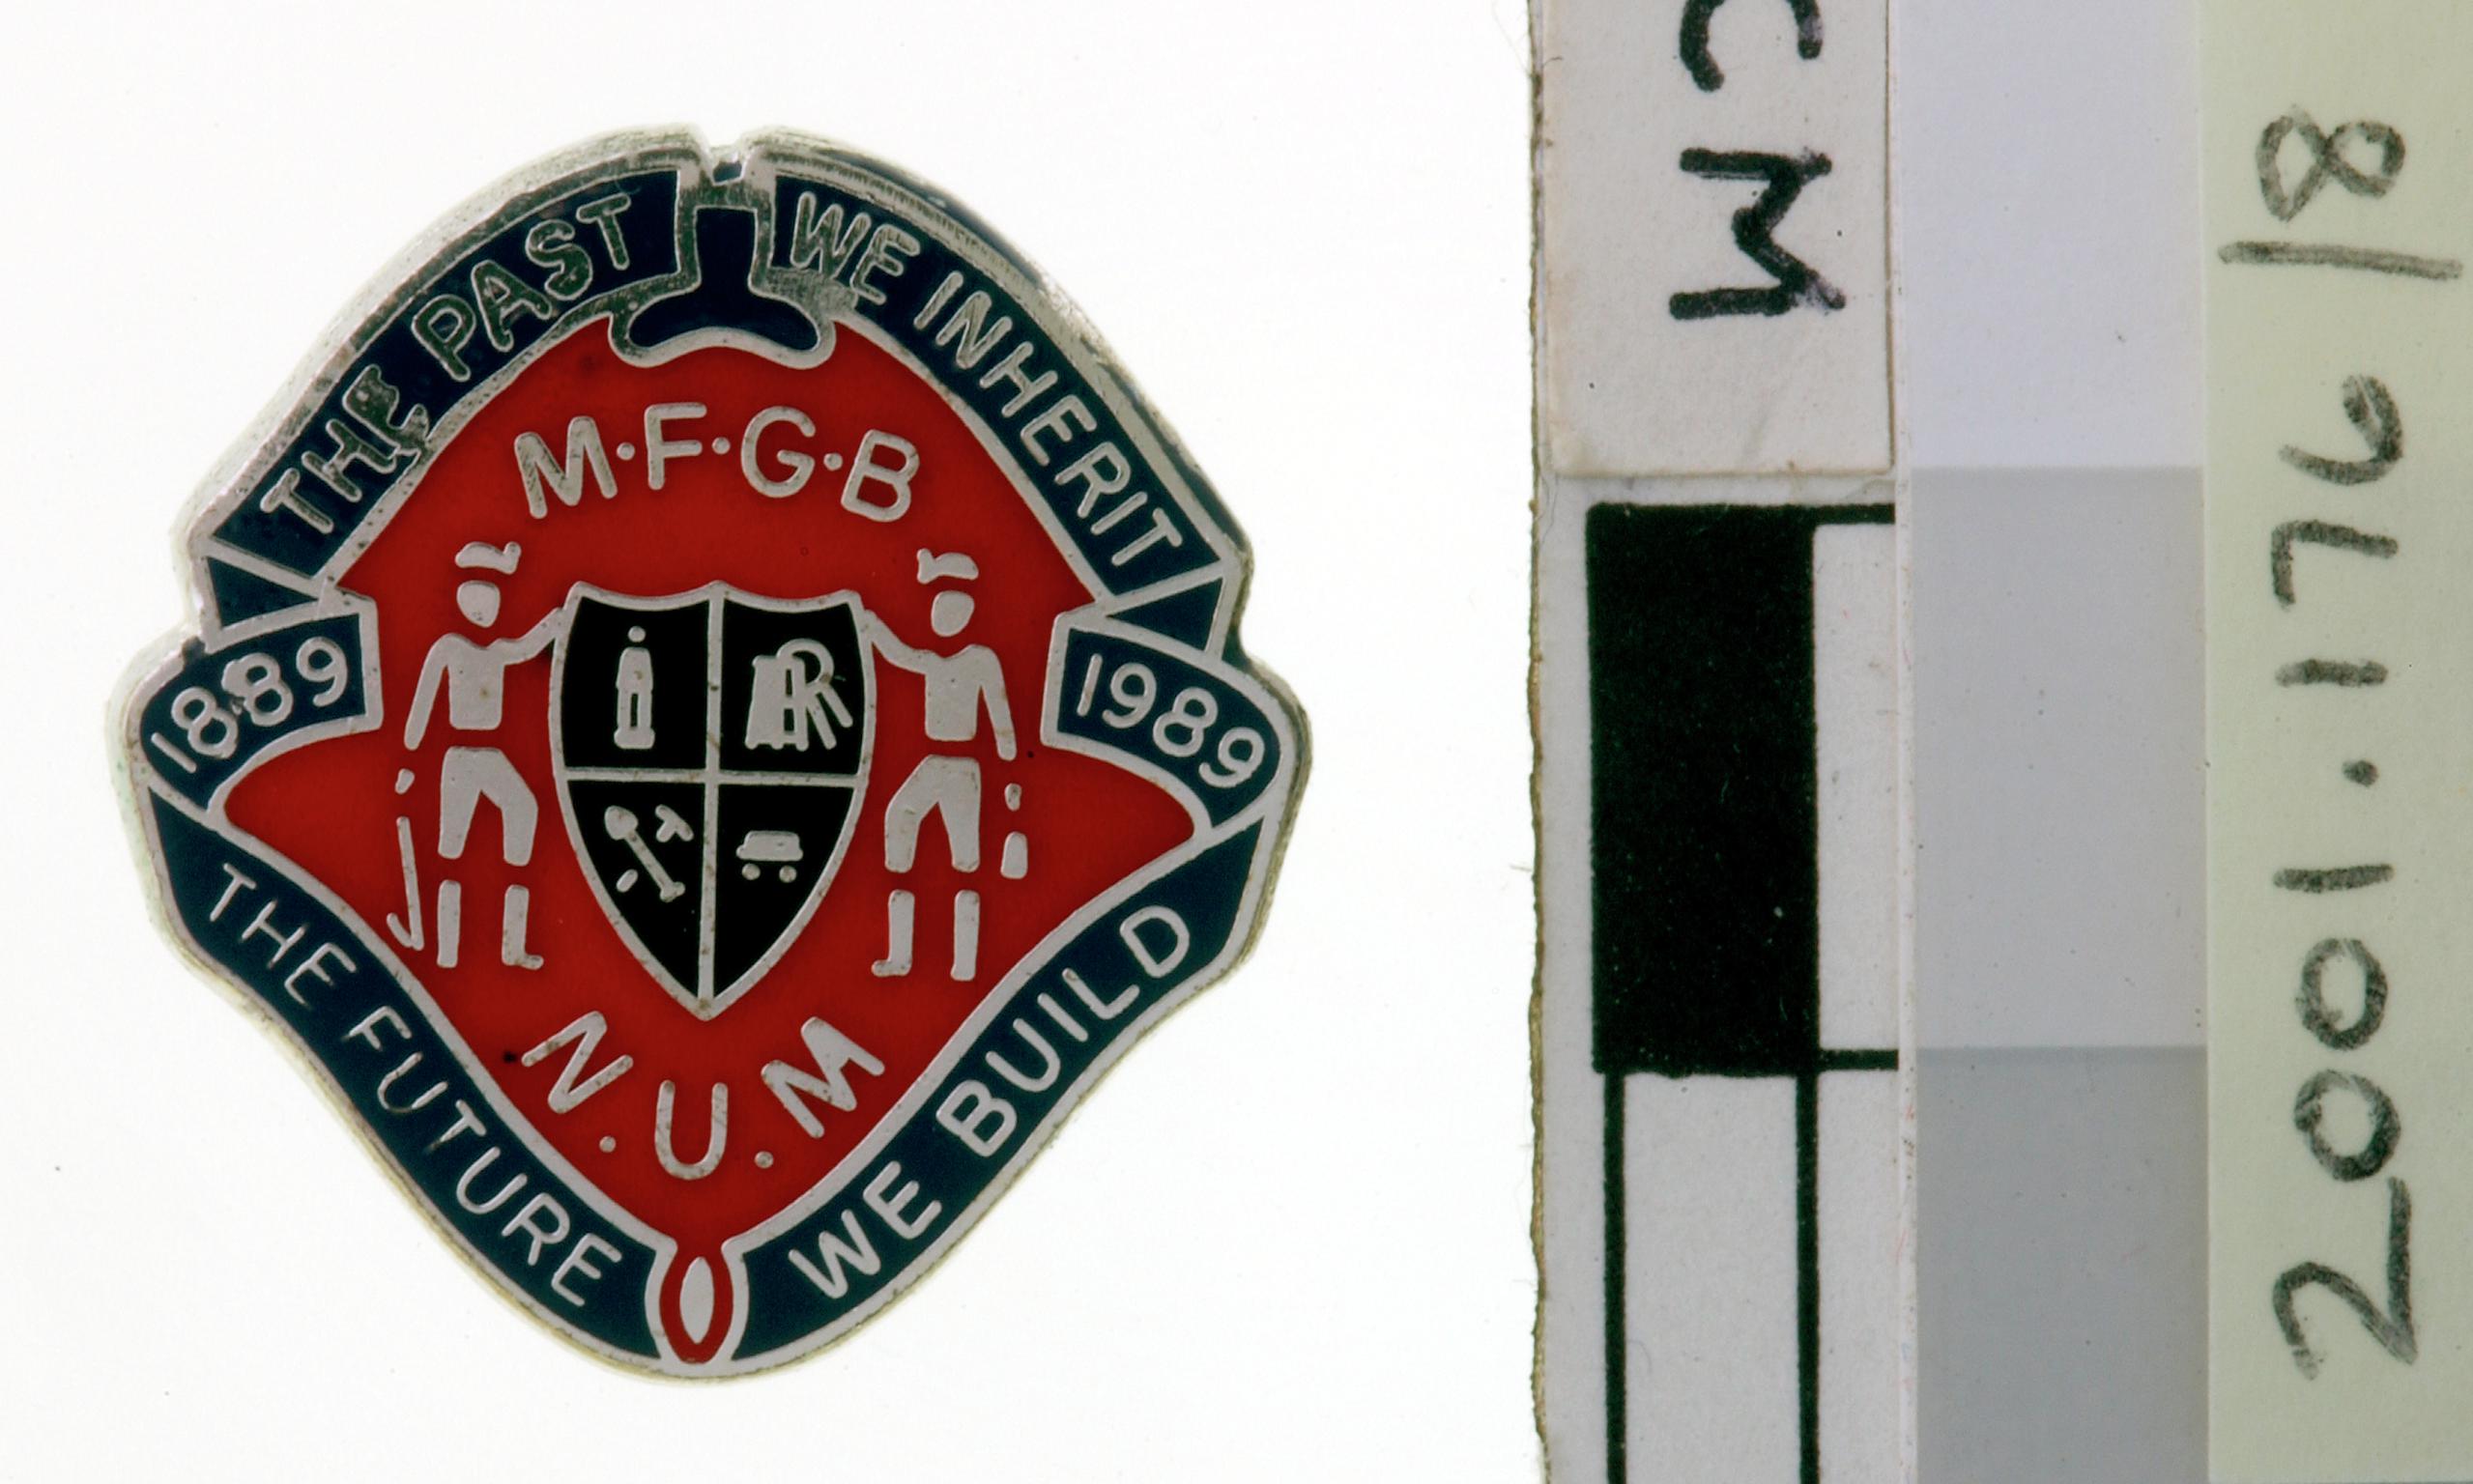 M.F.G.B. / N.U.M. 1889-1989, badge